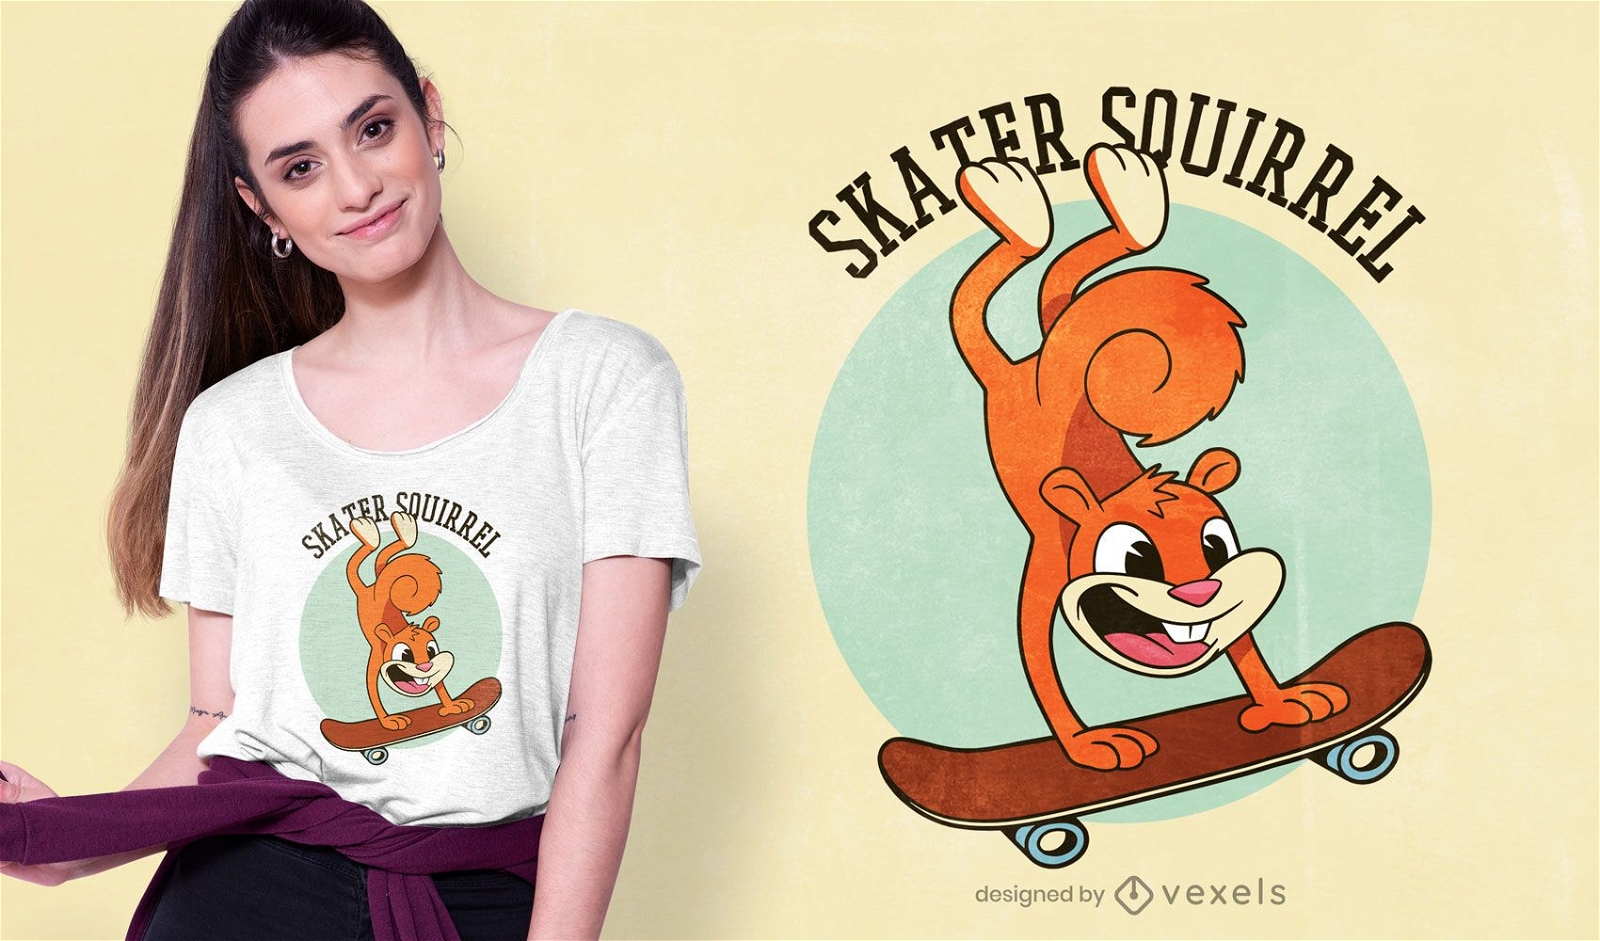 Skater squirrel t-shirt design